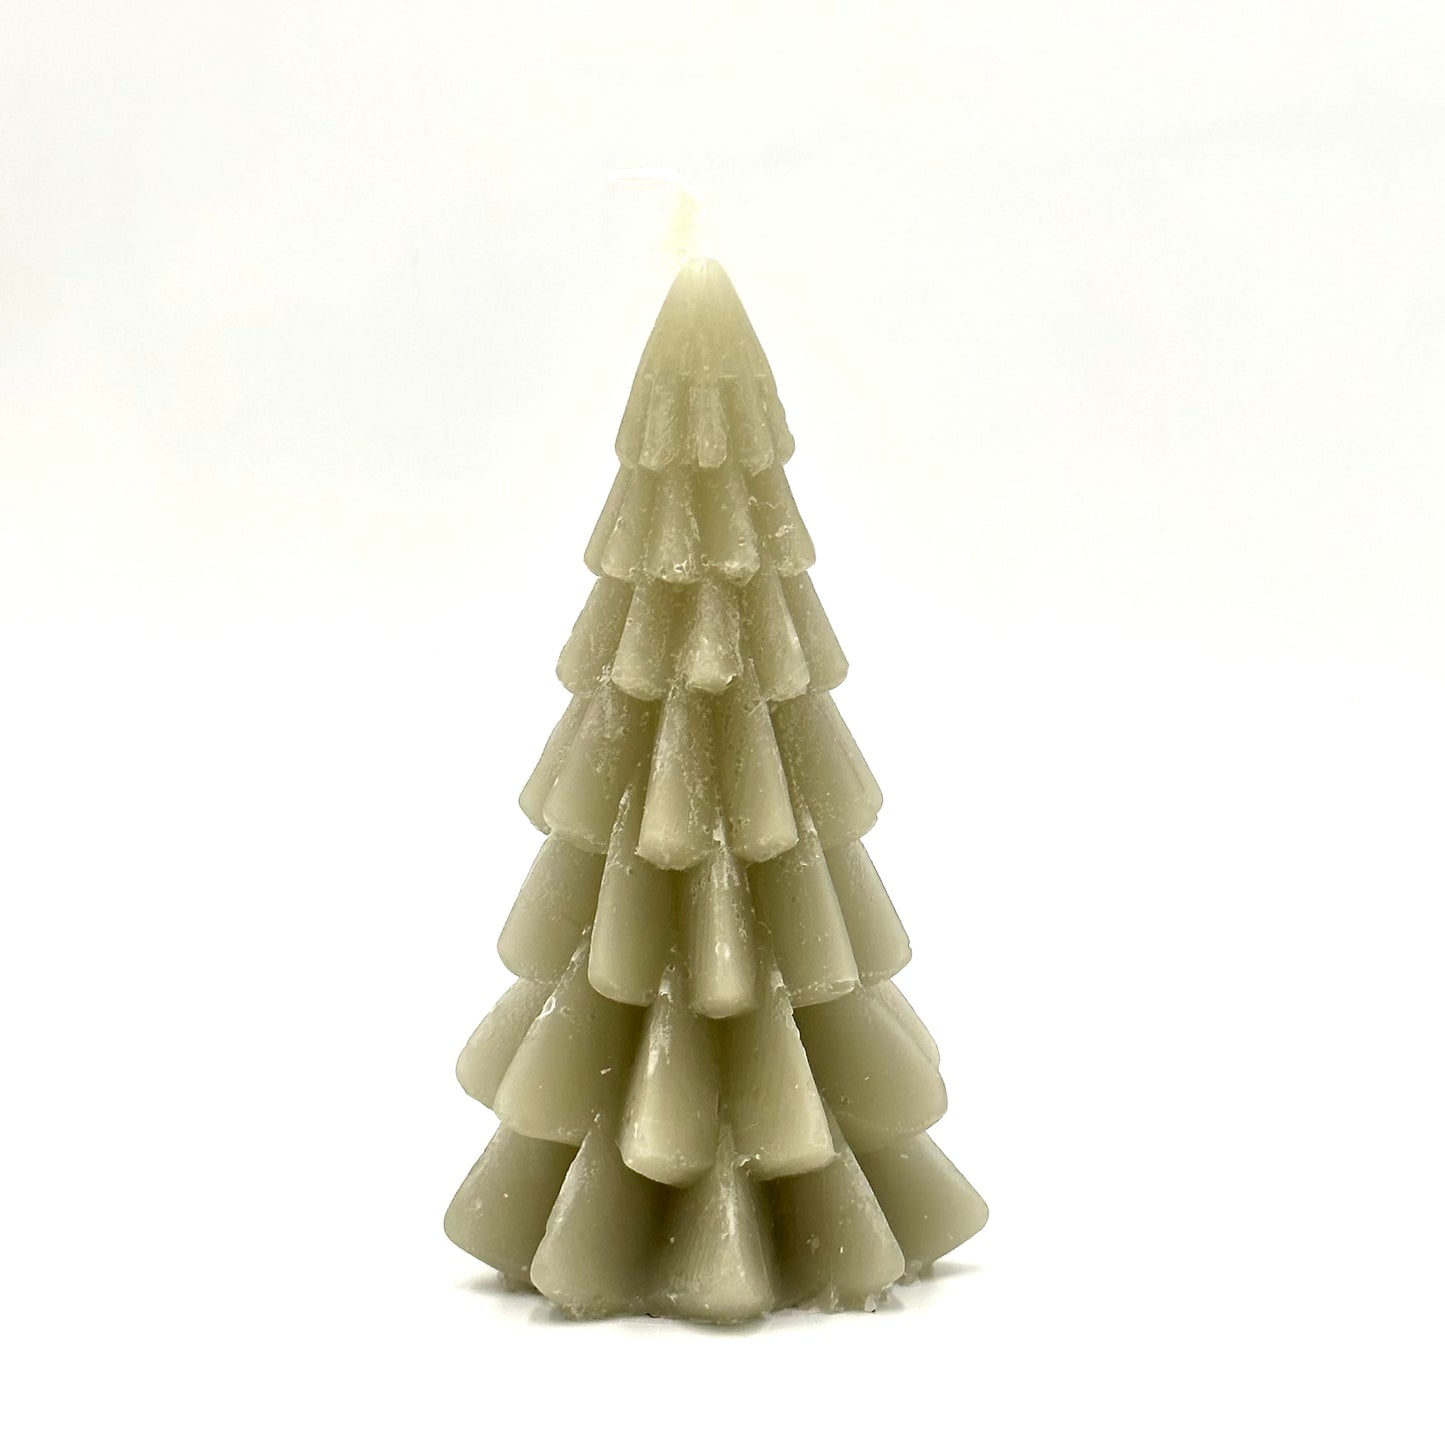 Candle "Christmas tree", grey-green